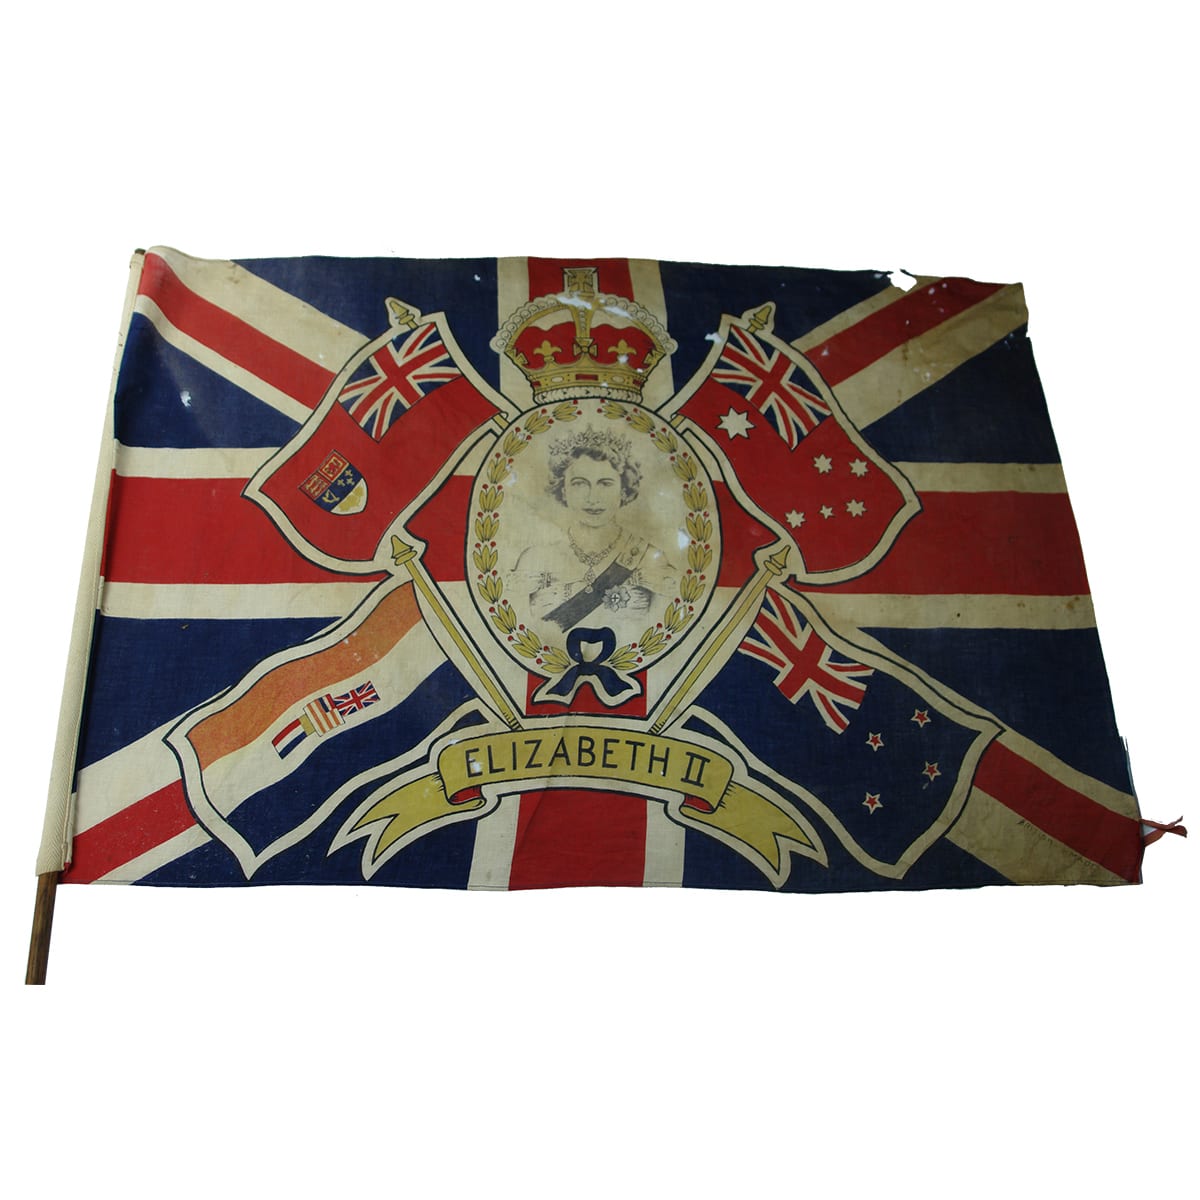 Commemorative Flag. Queen Elizabeth II Coronation 1953.